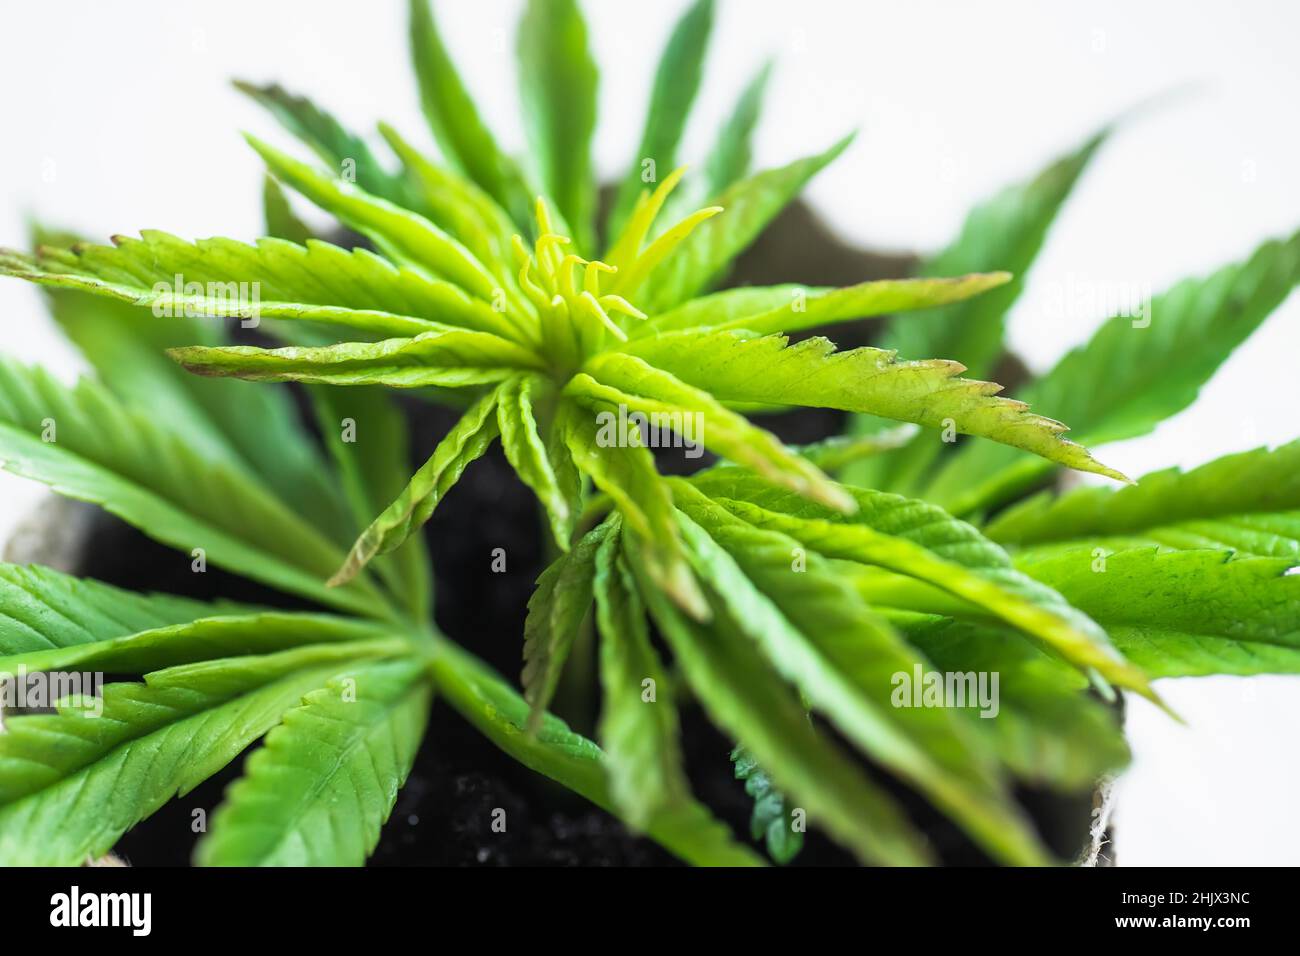 Hemp young plant close-up. Growing marijuana at home for medicinal needs. baby cannabis plant. Marijuana plantation farm concept. Stock Photo